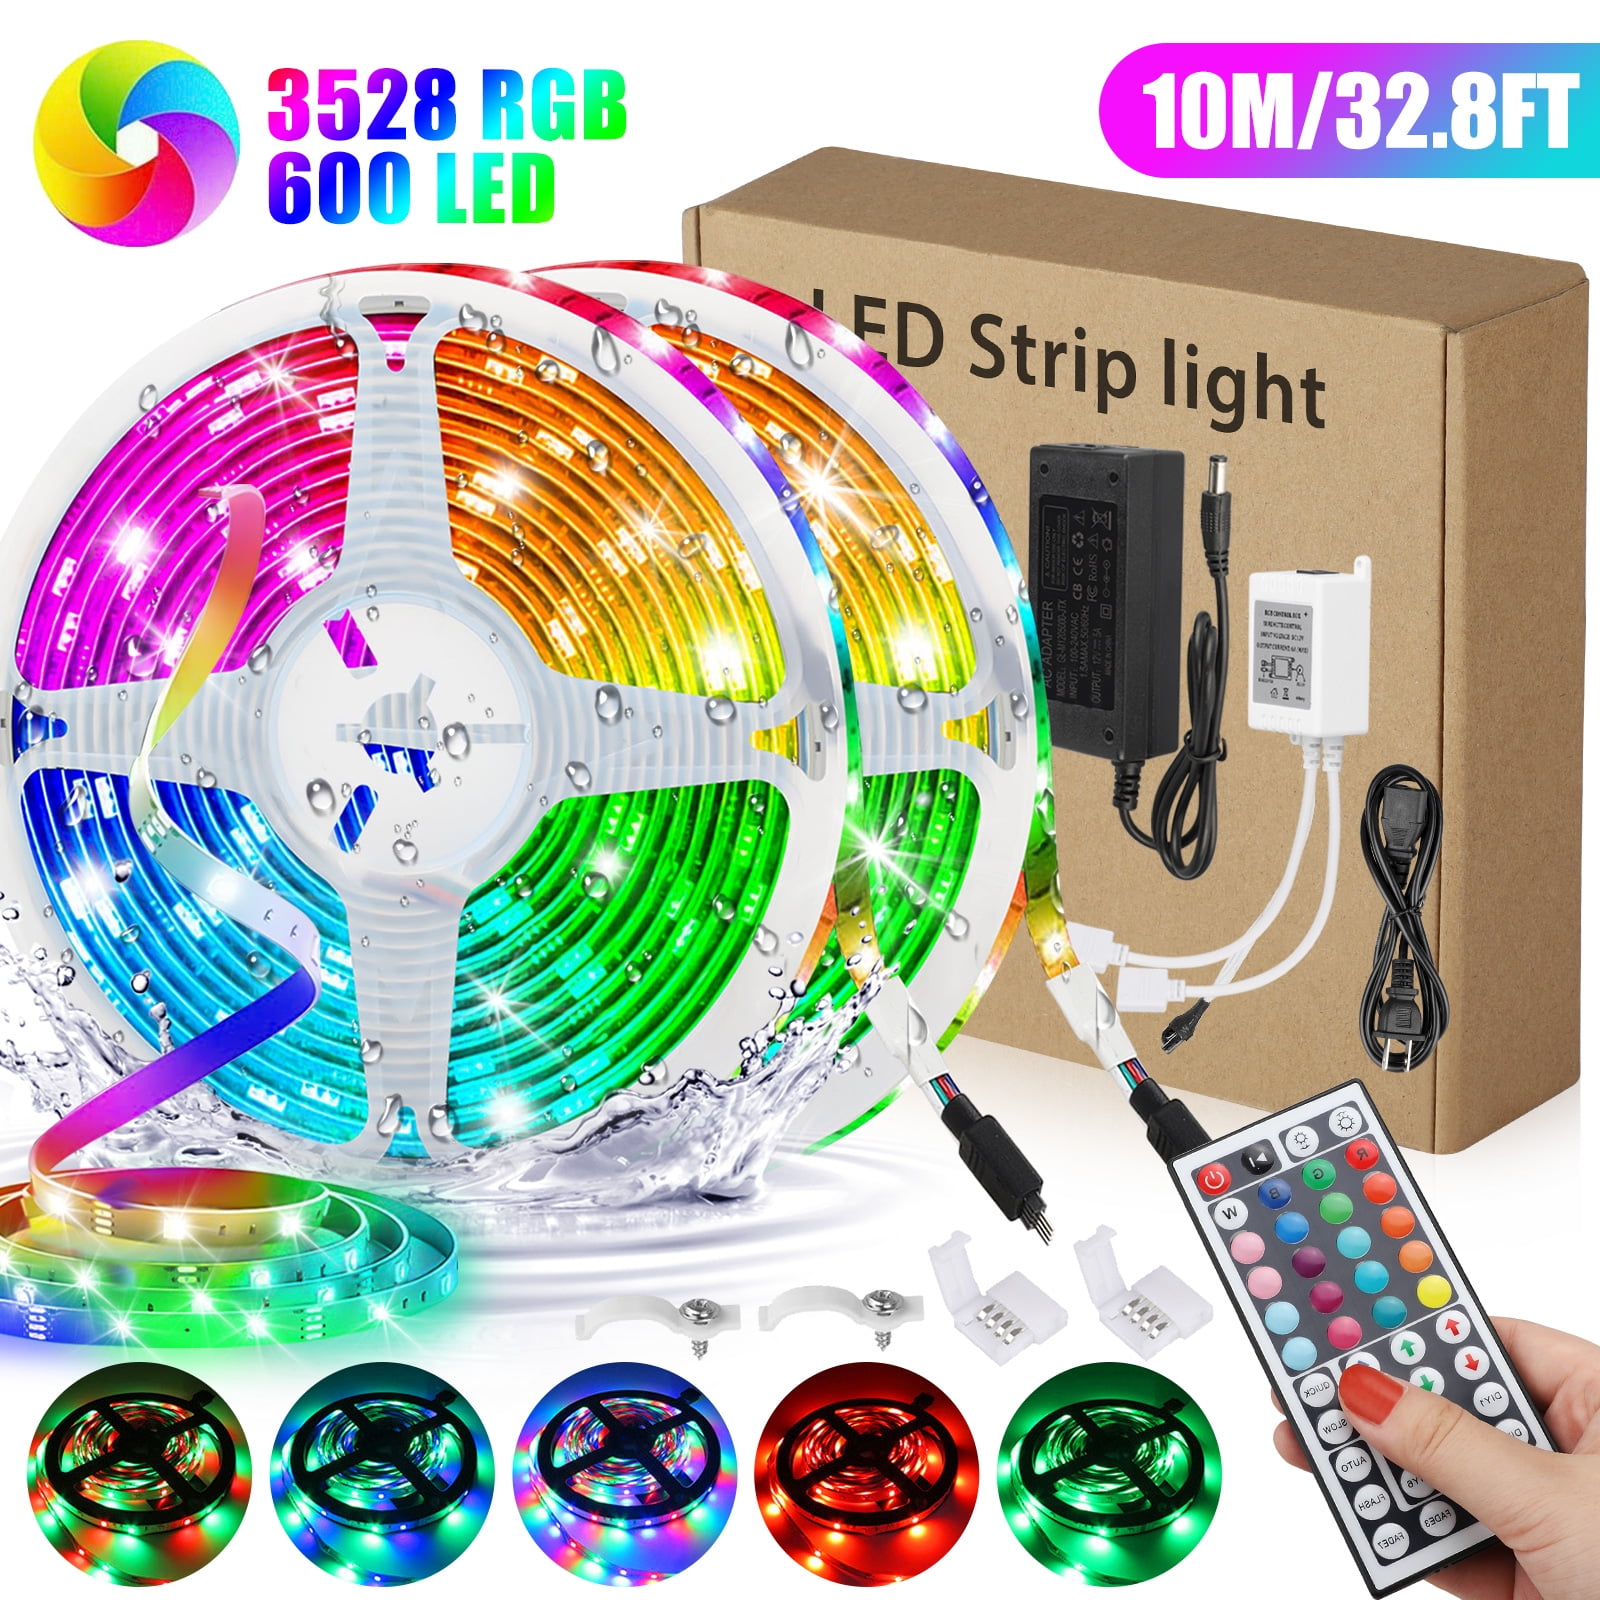 Details about   USB LED Strip Lights RGB Remote Control Room Decorative Lamp TV Backlight 